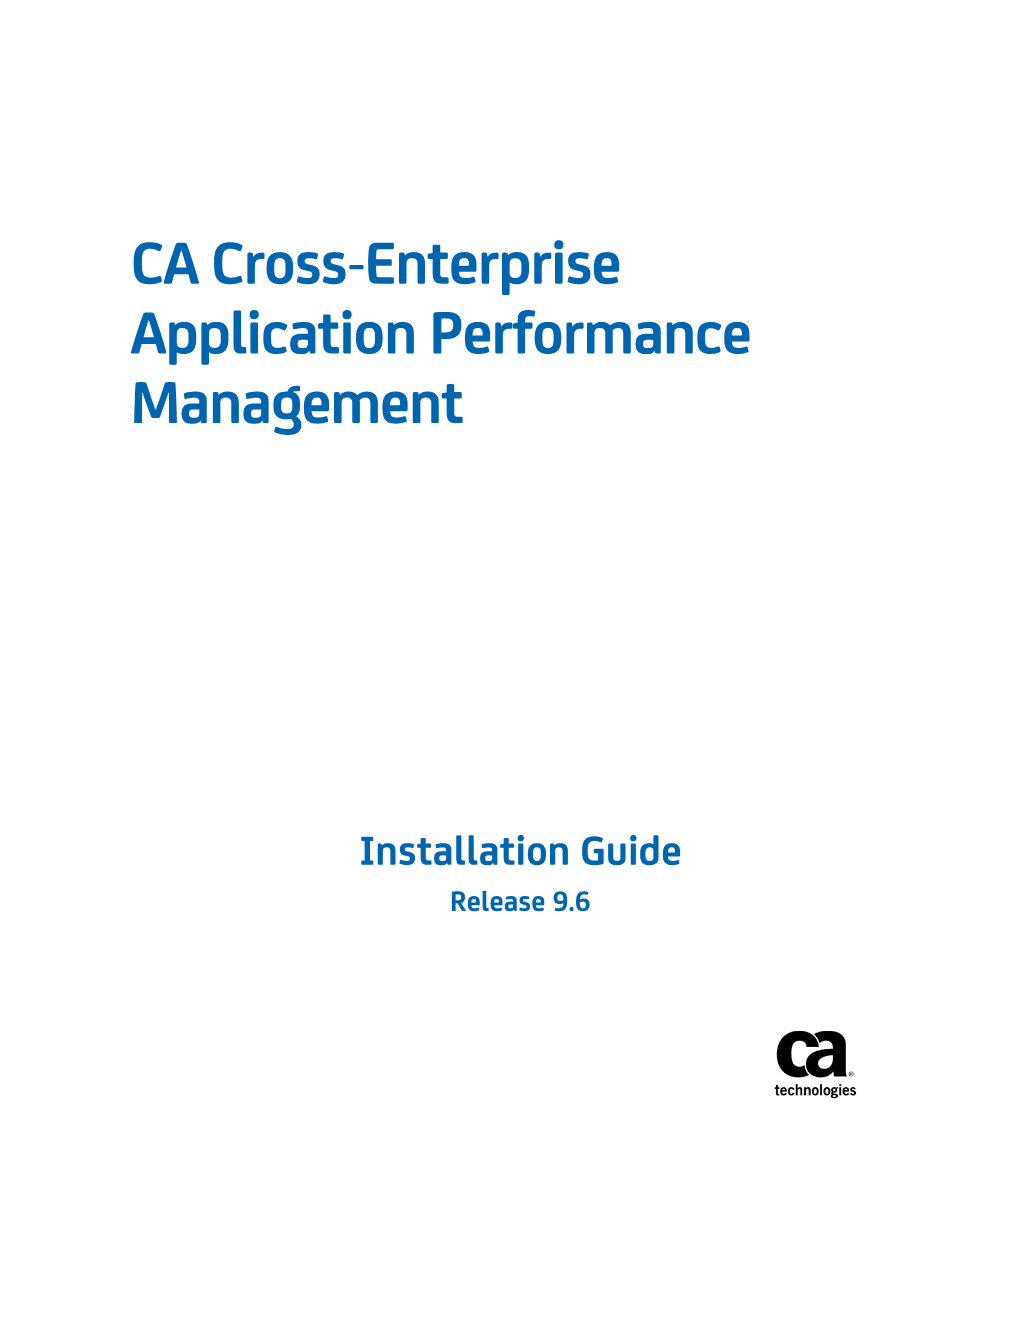 CA Cross-Enterprise Application Performance Management Installation Guide